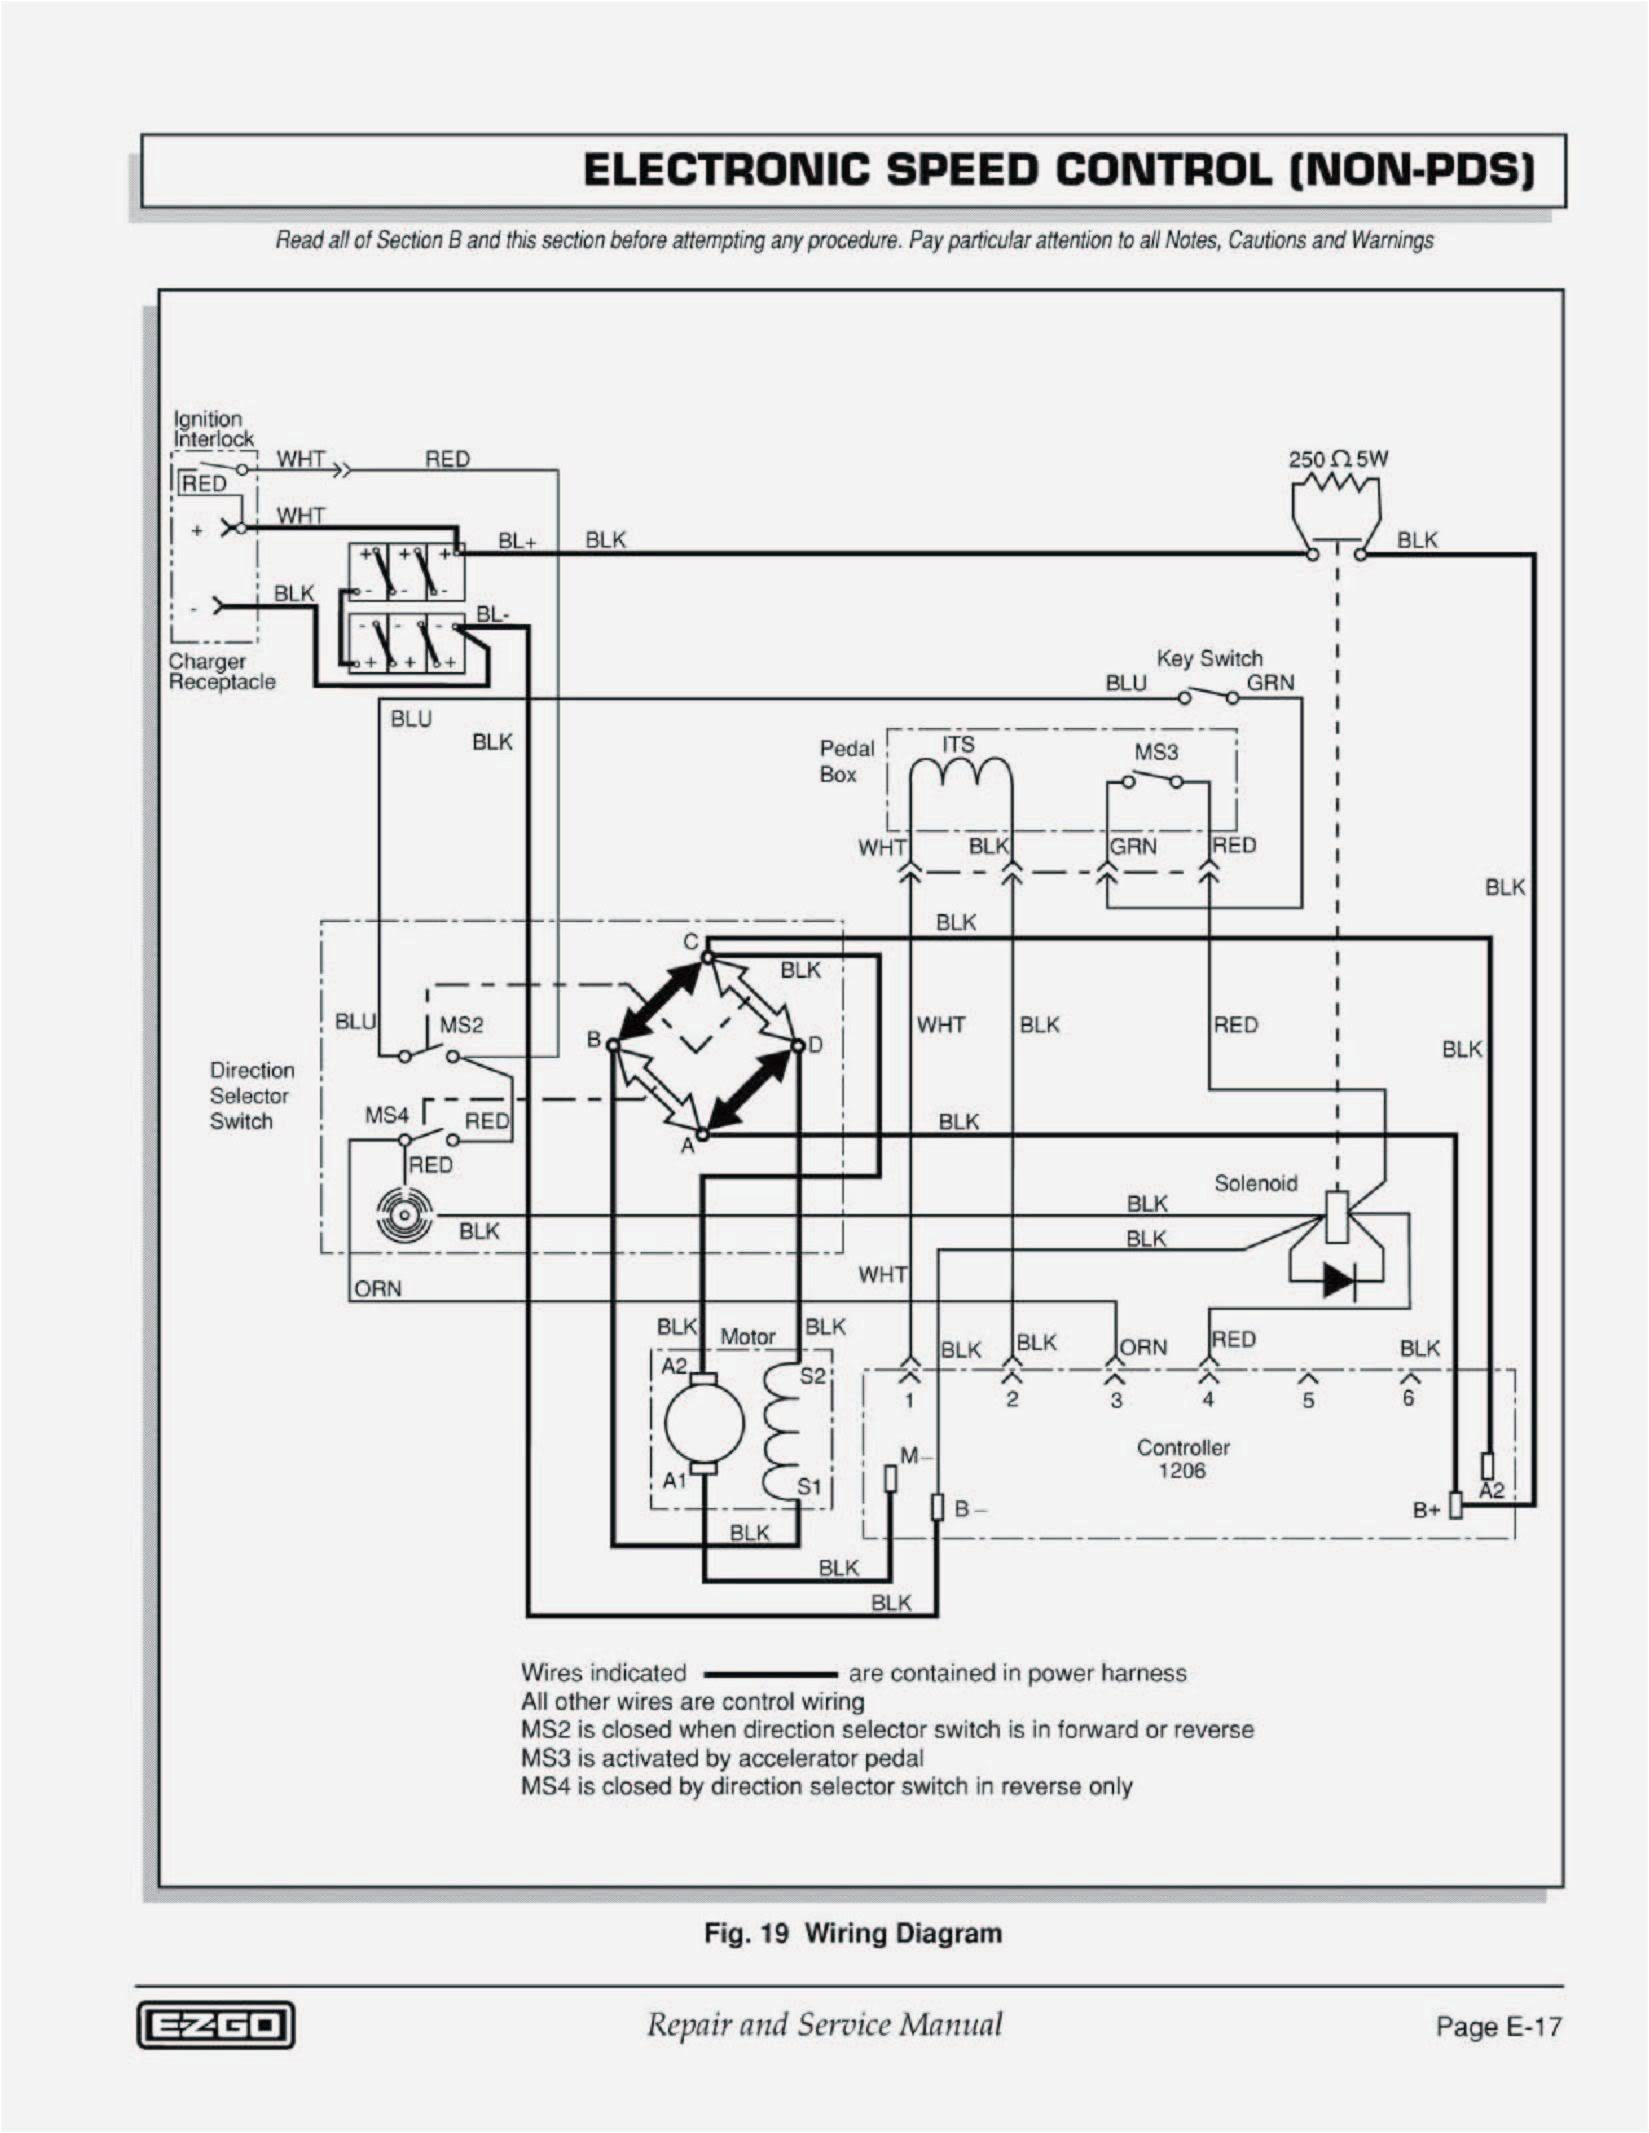 fairplay wiring diagram wiring diagram view2010 fairplay wiring diagram my wiring diagram fairplay wiring diagram